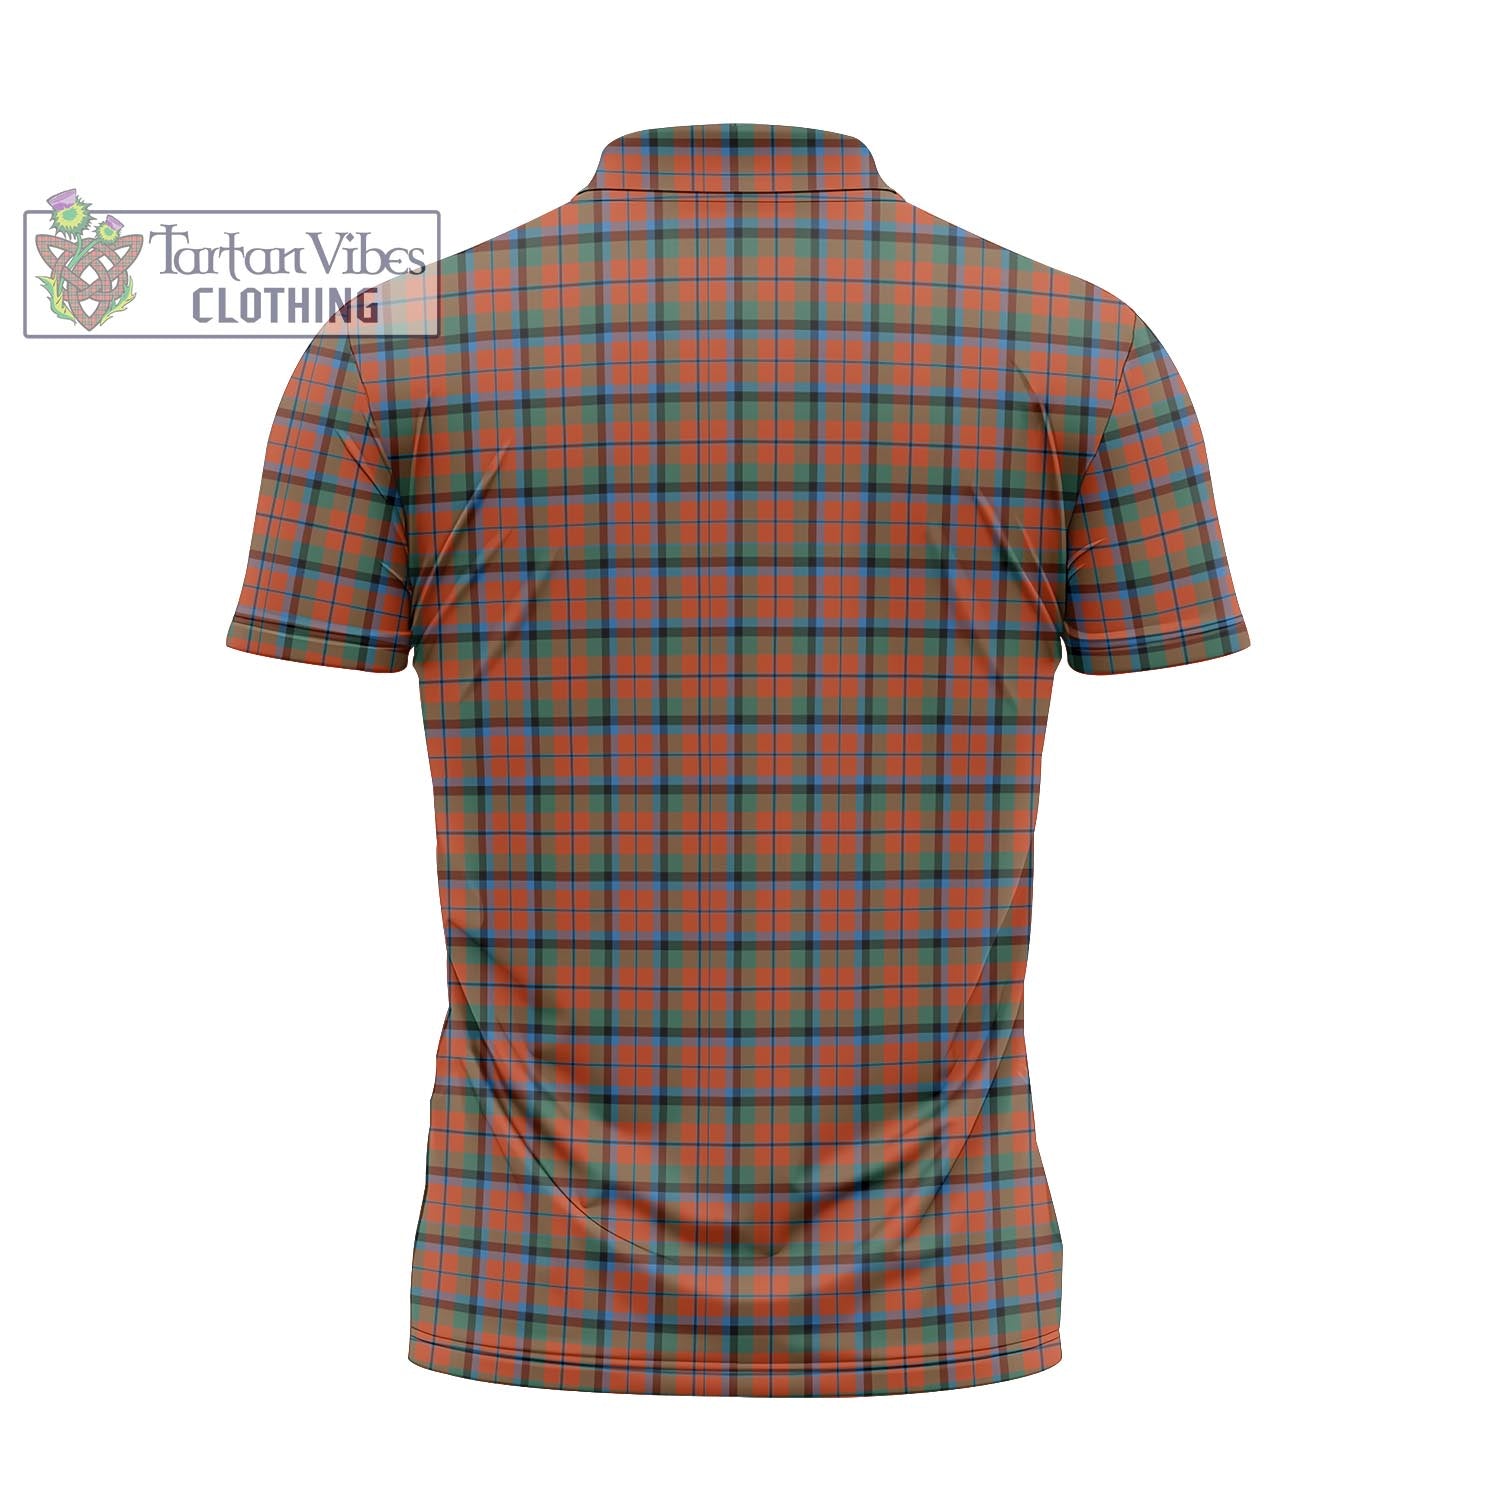 Tartan Vibes Clothing MacNaughton Ancient Tartan Zipper Polo Shirt with Family Crest